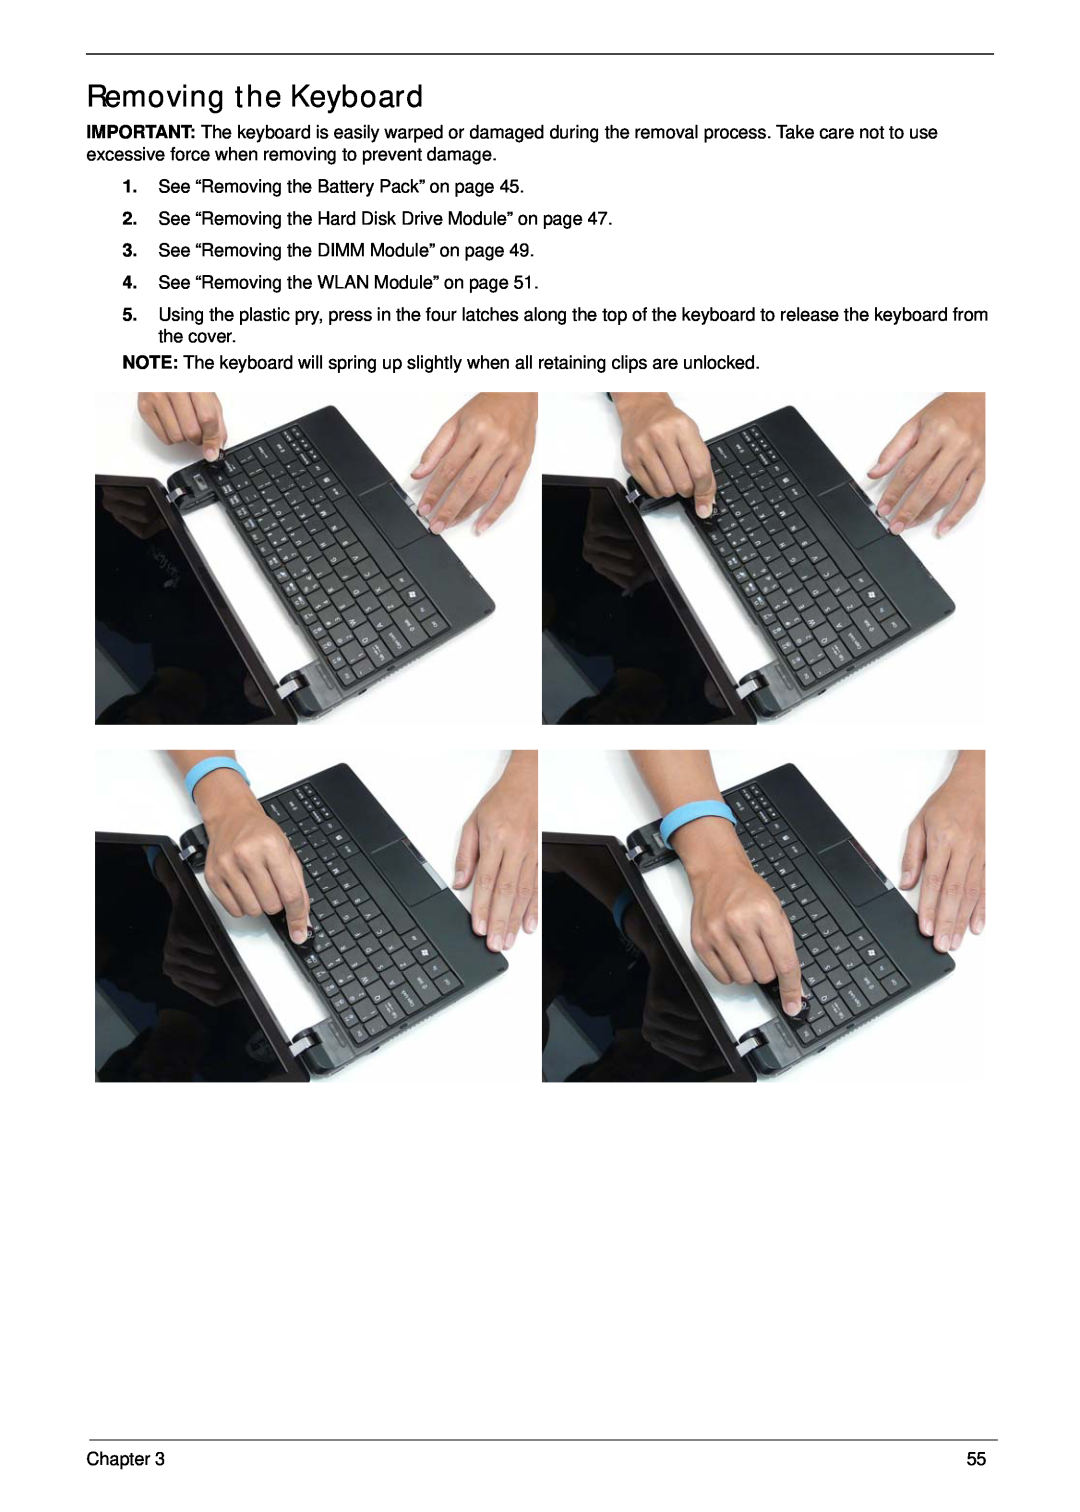 Gateway EC14 manual Removing the Keyboard 